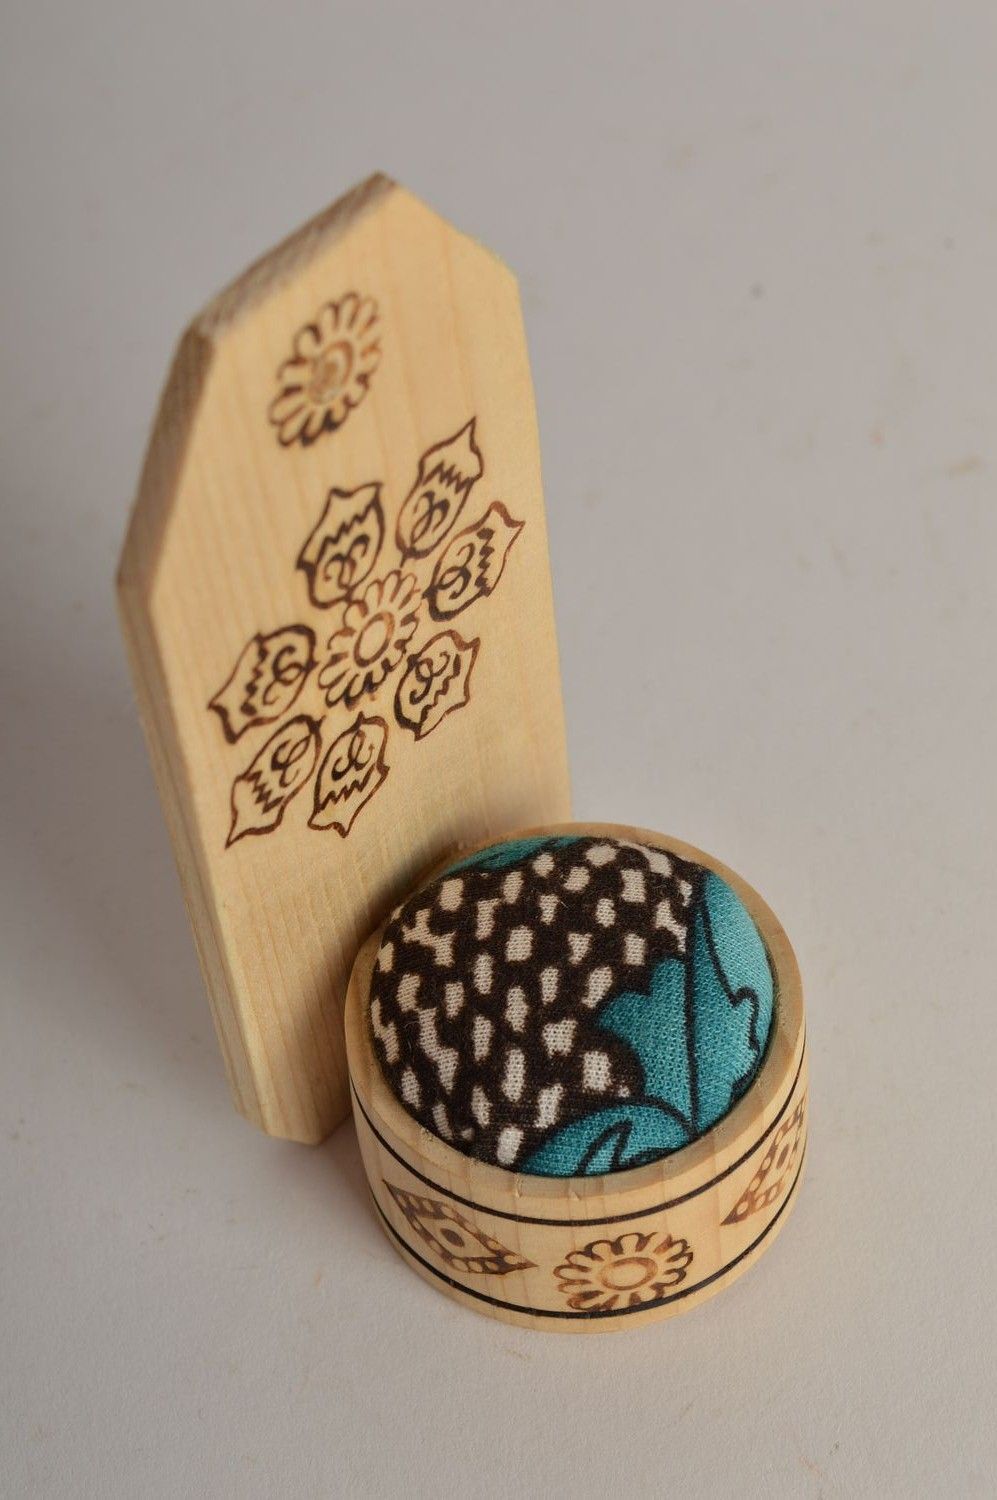 Unusual handmade pin cushion wooden pincushion wood craft needlework ideas photo 5